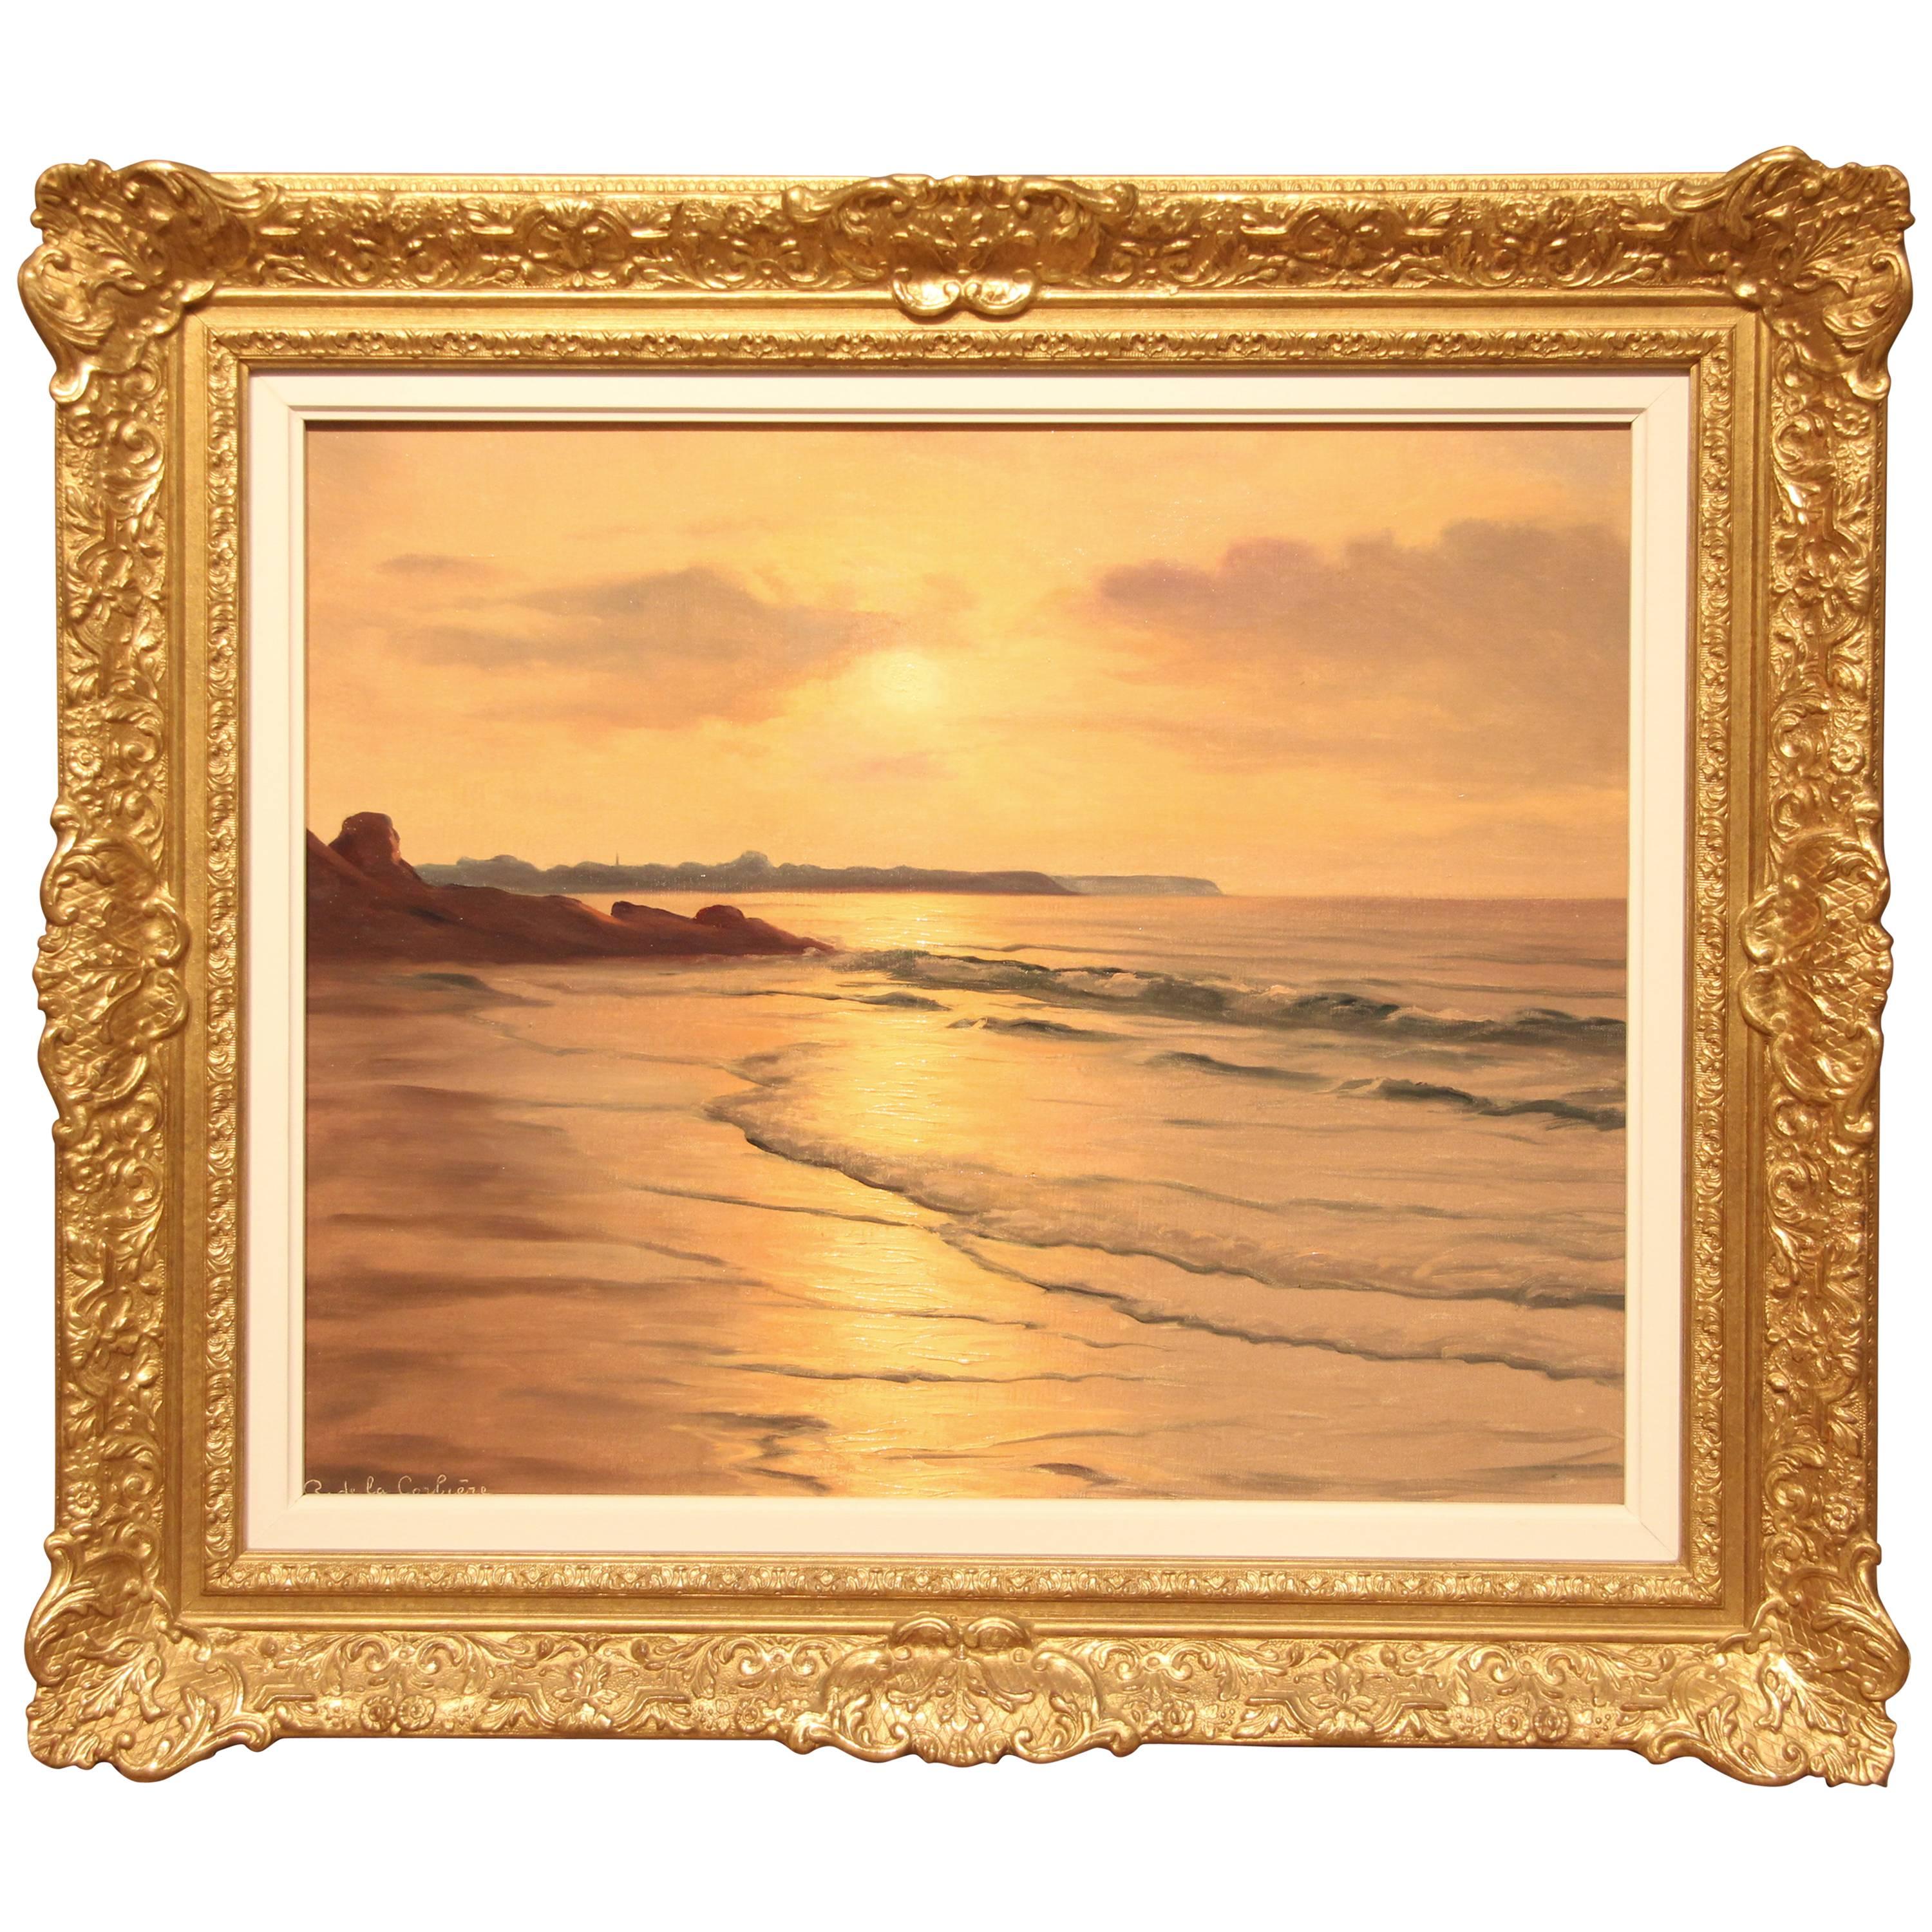 Brittany Coast Sunset Oil Painting by Roger de la Corbiere